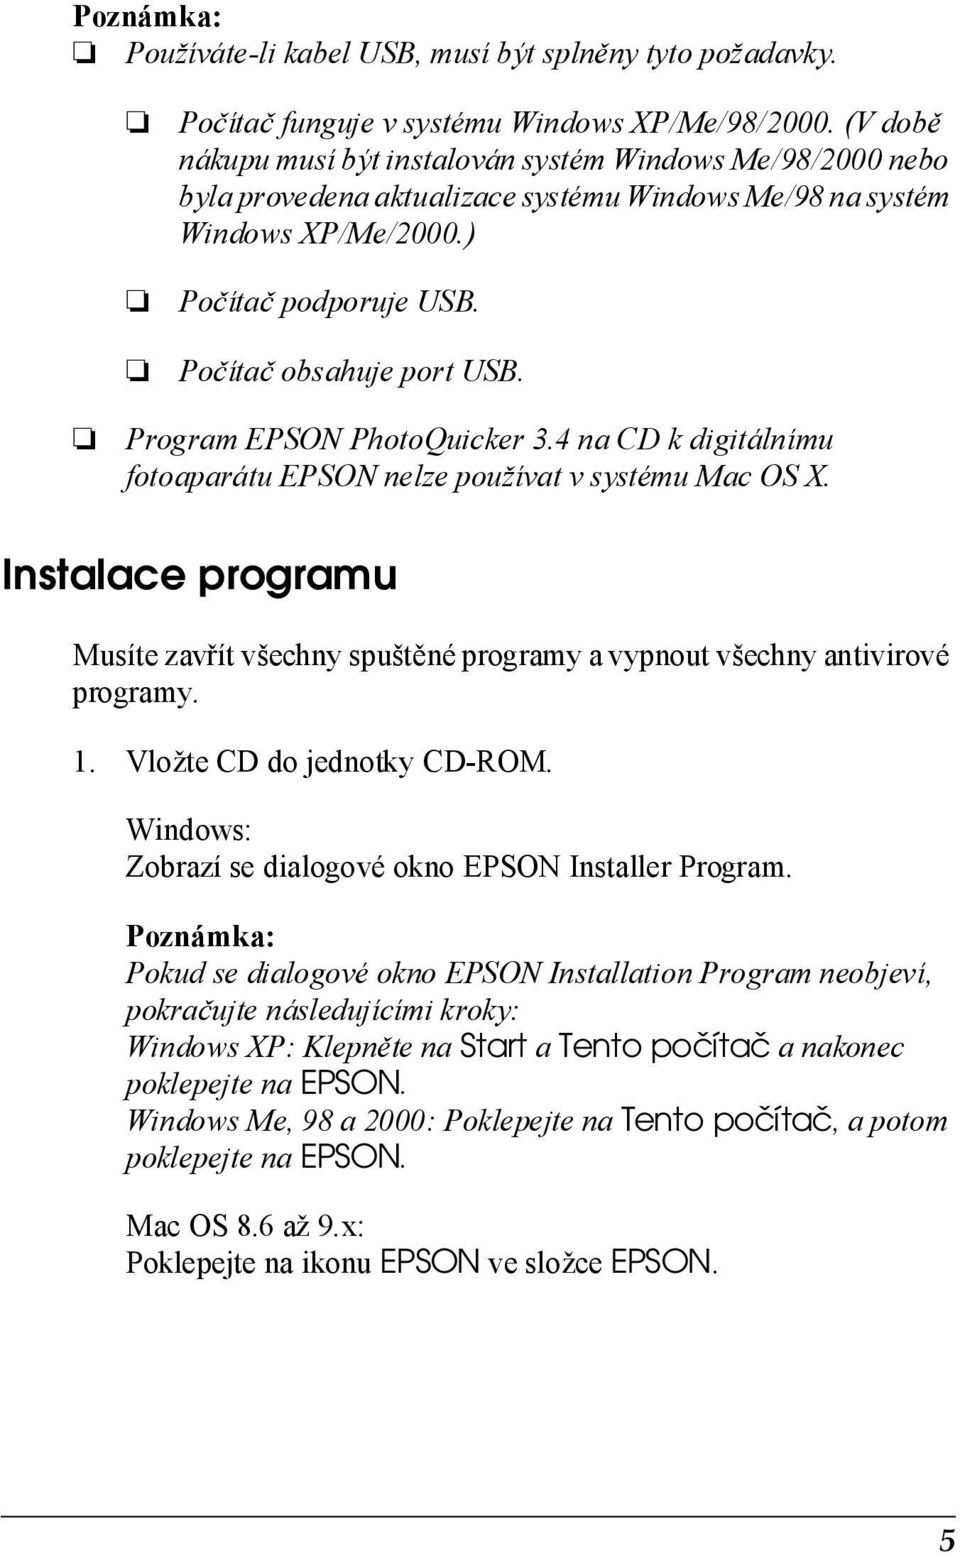 Program EPSON PhotoQuicker 3.4 na CD k digitálnímu fotoaparátu EPSON nelze používat v systému Mac OS X.